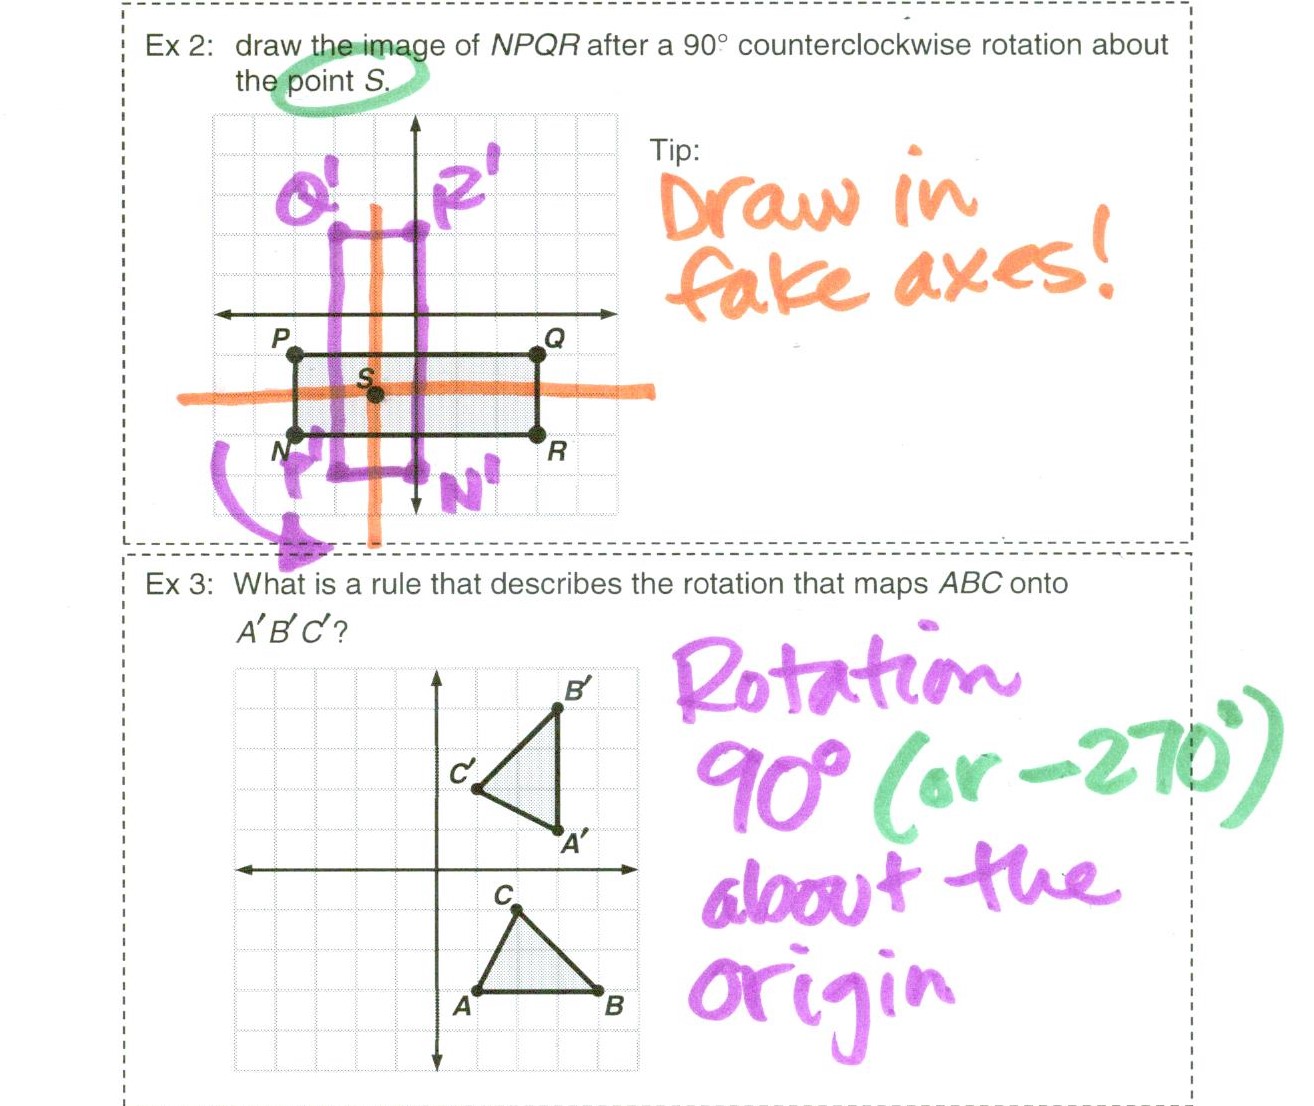 geometry rotation rules pdf